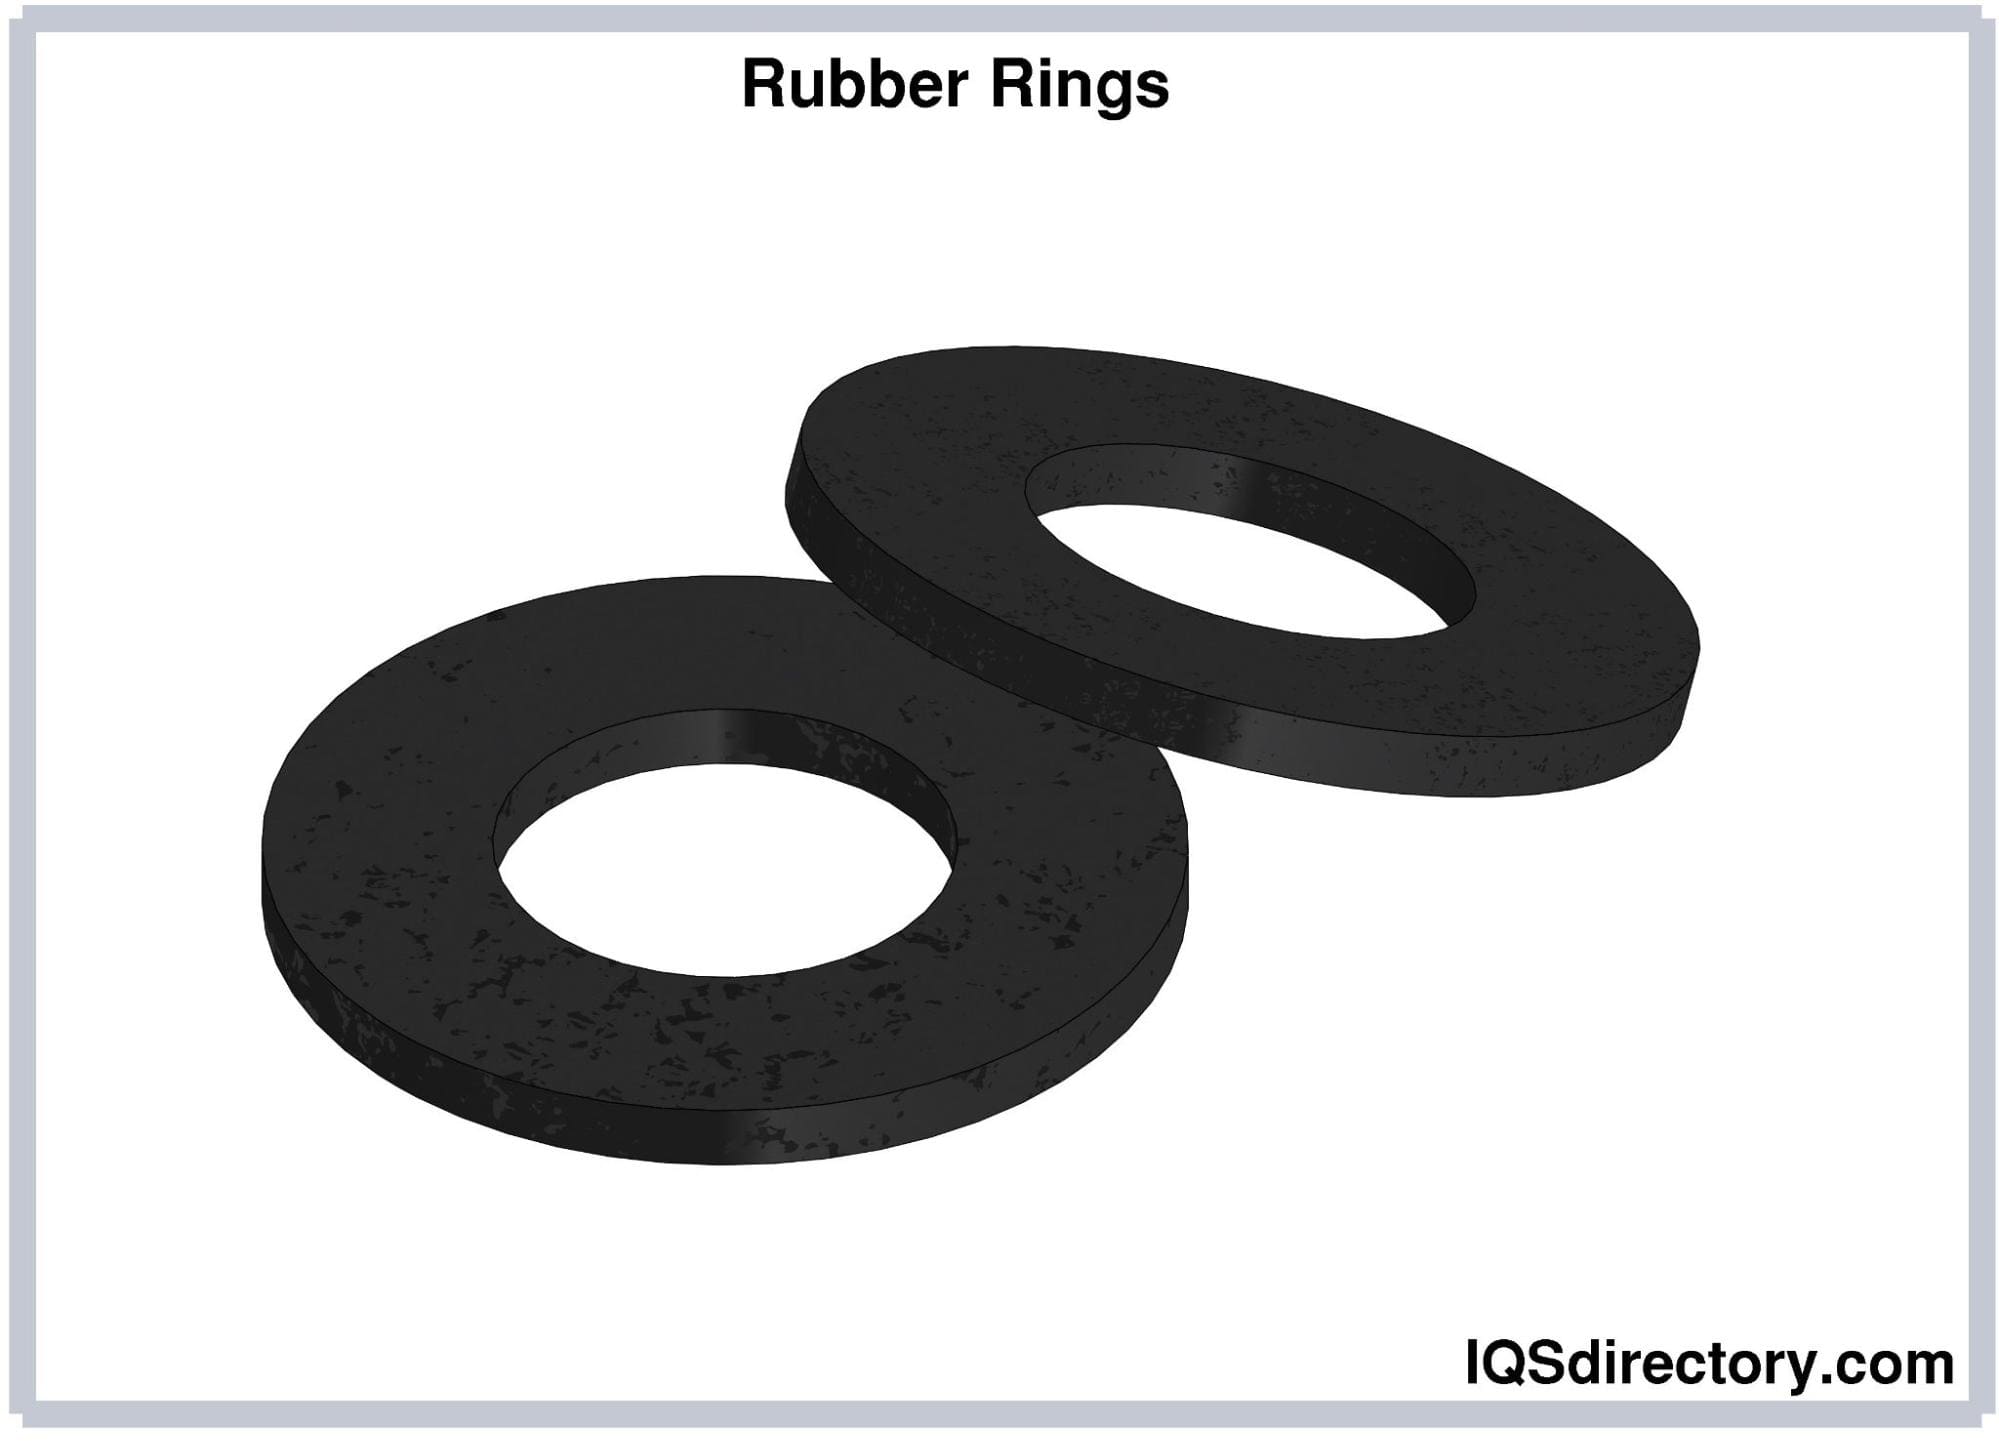 Rubber Rings